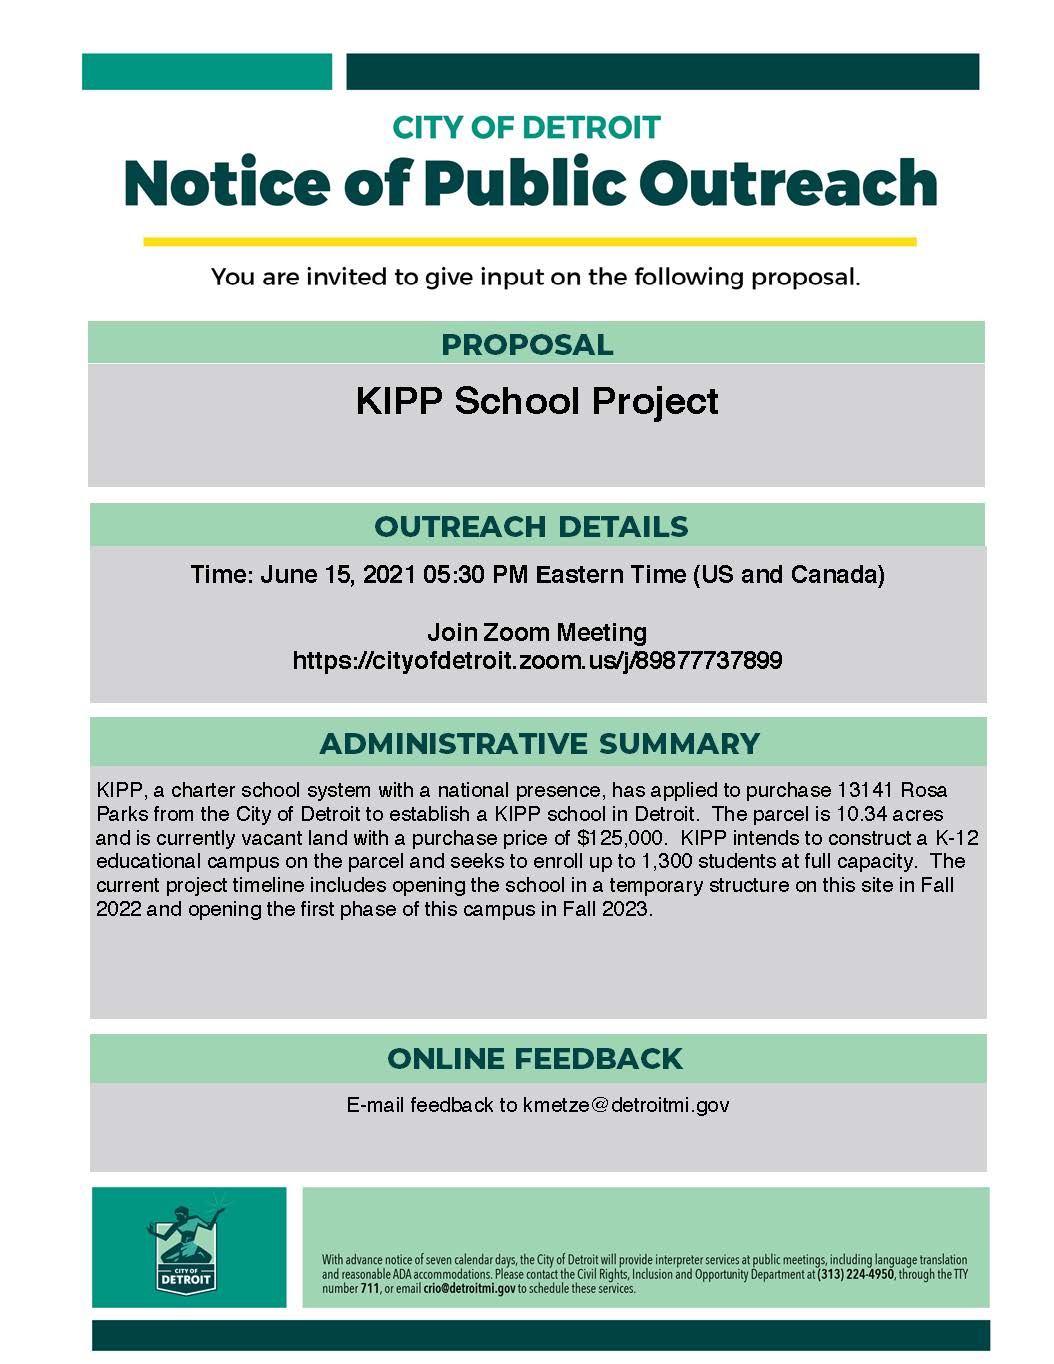 Notice of Public Outreach: KIPP School Project 2